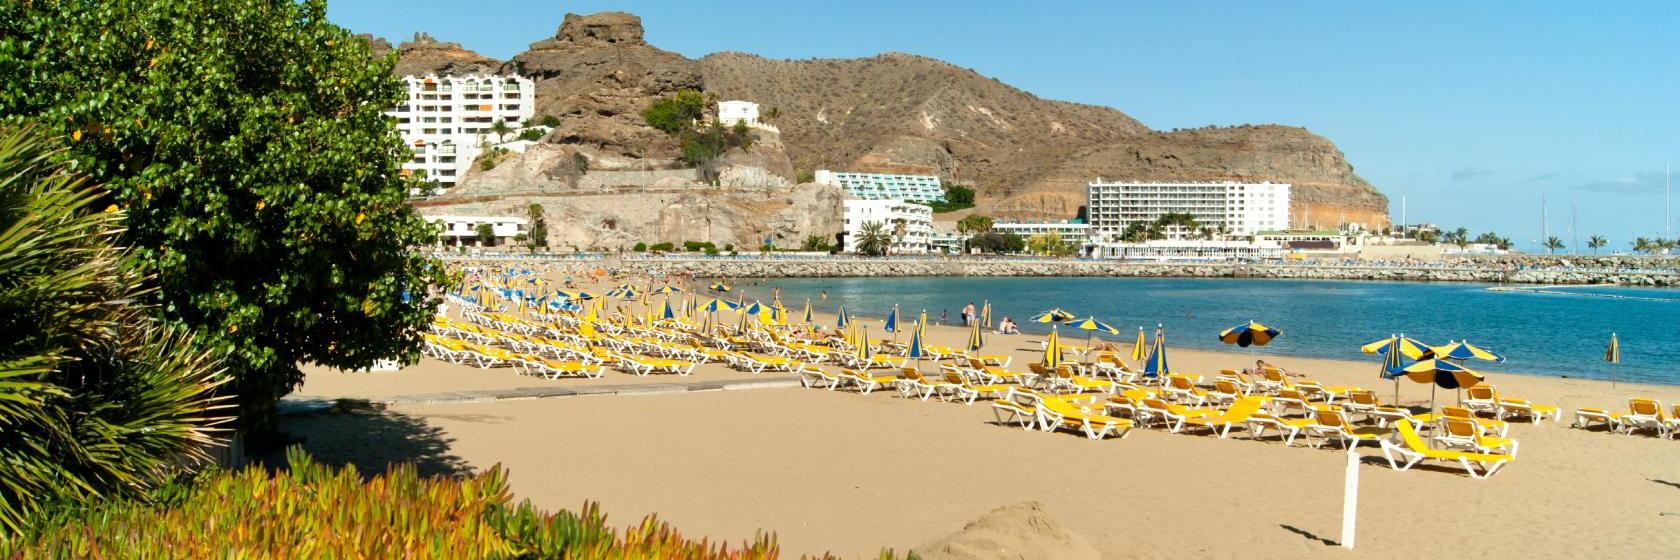 10 Best Puerto Rico de Gran Canaria Hotels, Spain (From $45)